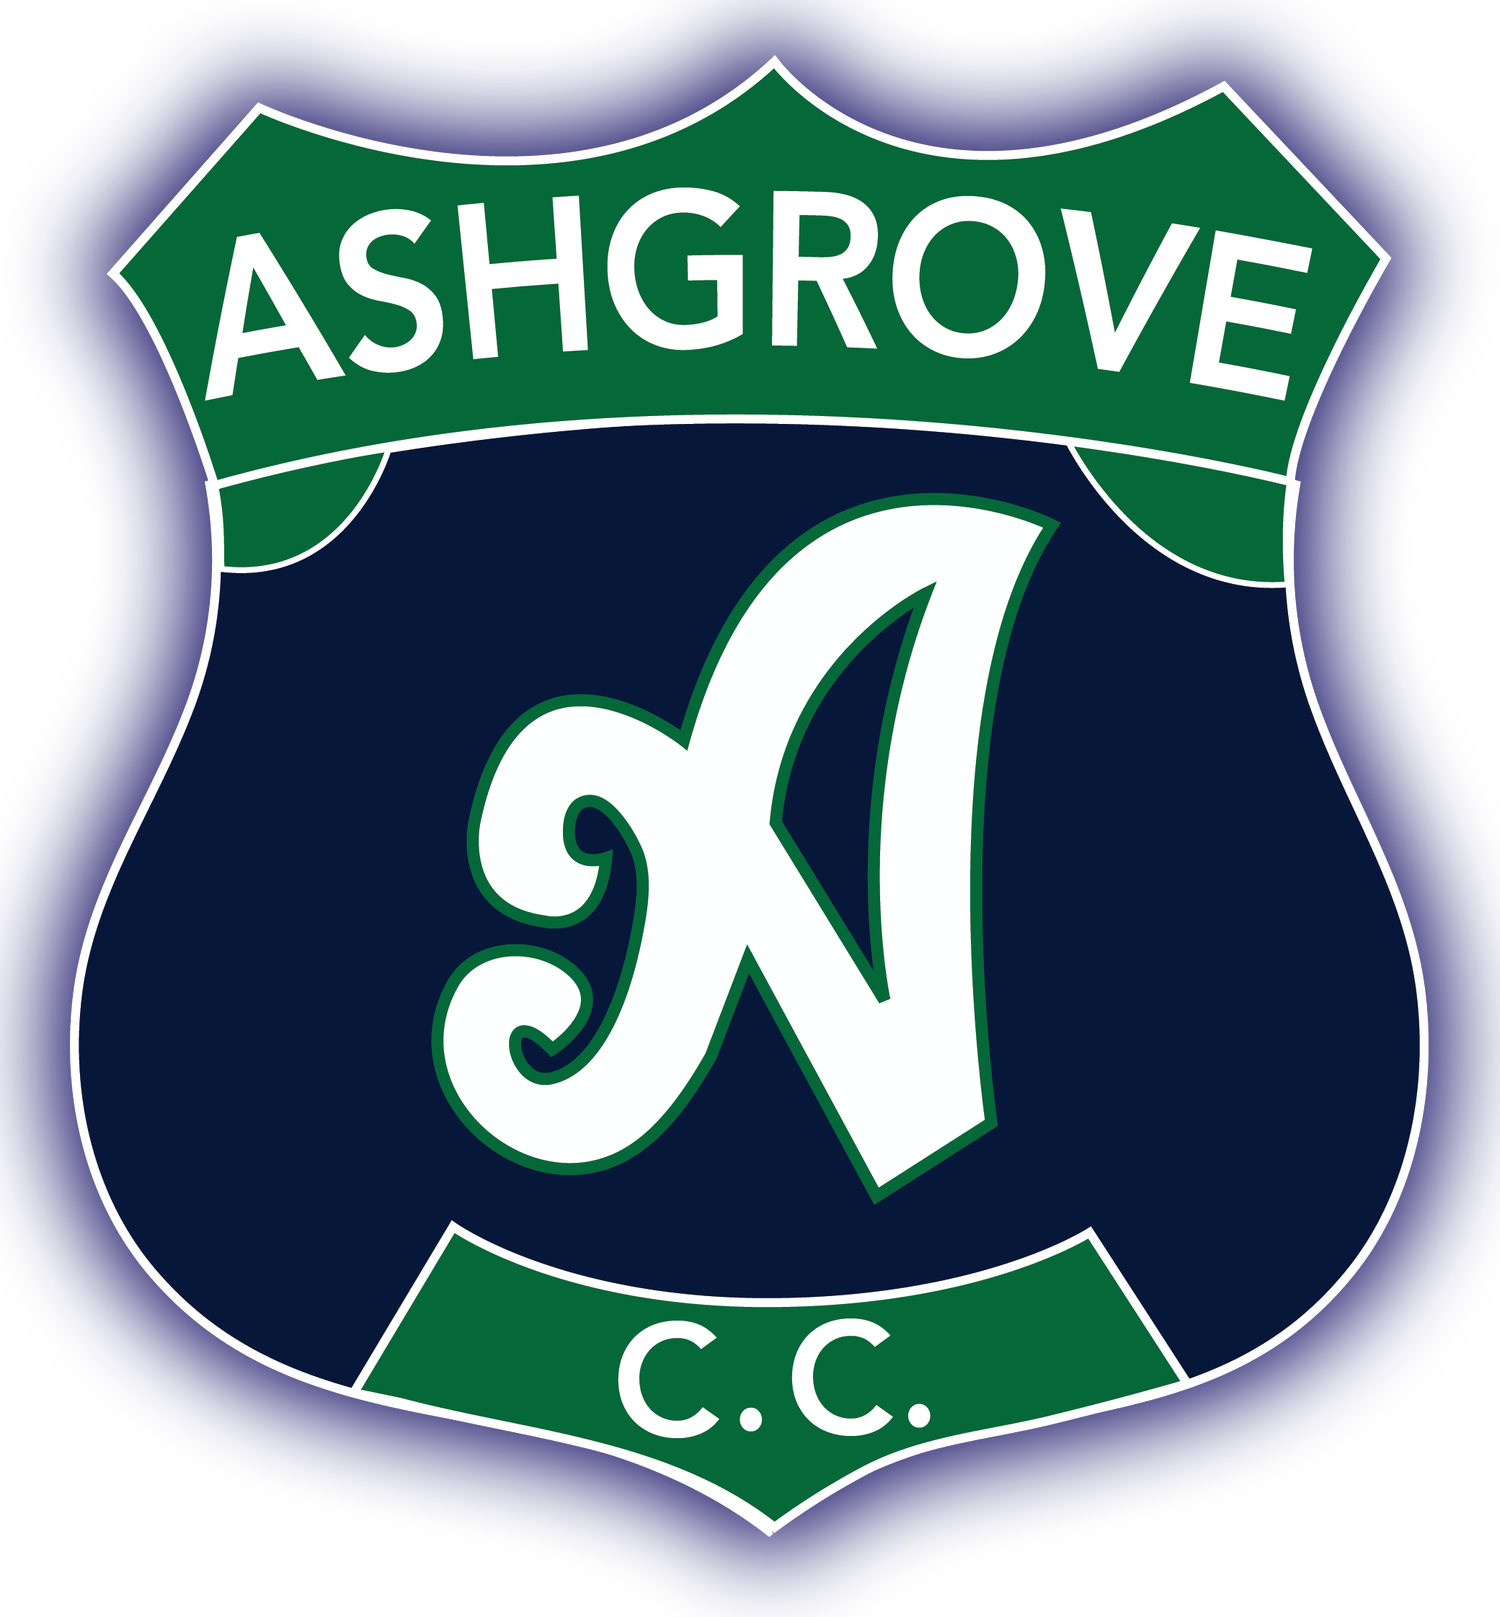 Ashgrove Calisthenics Club